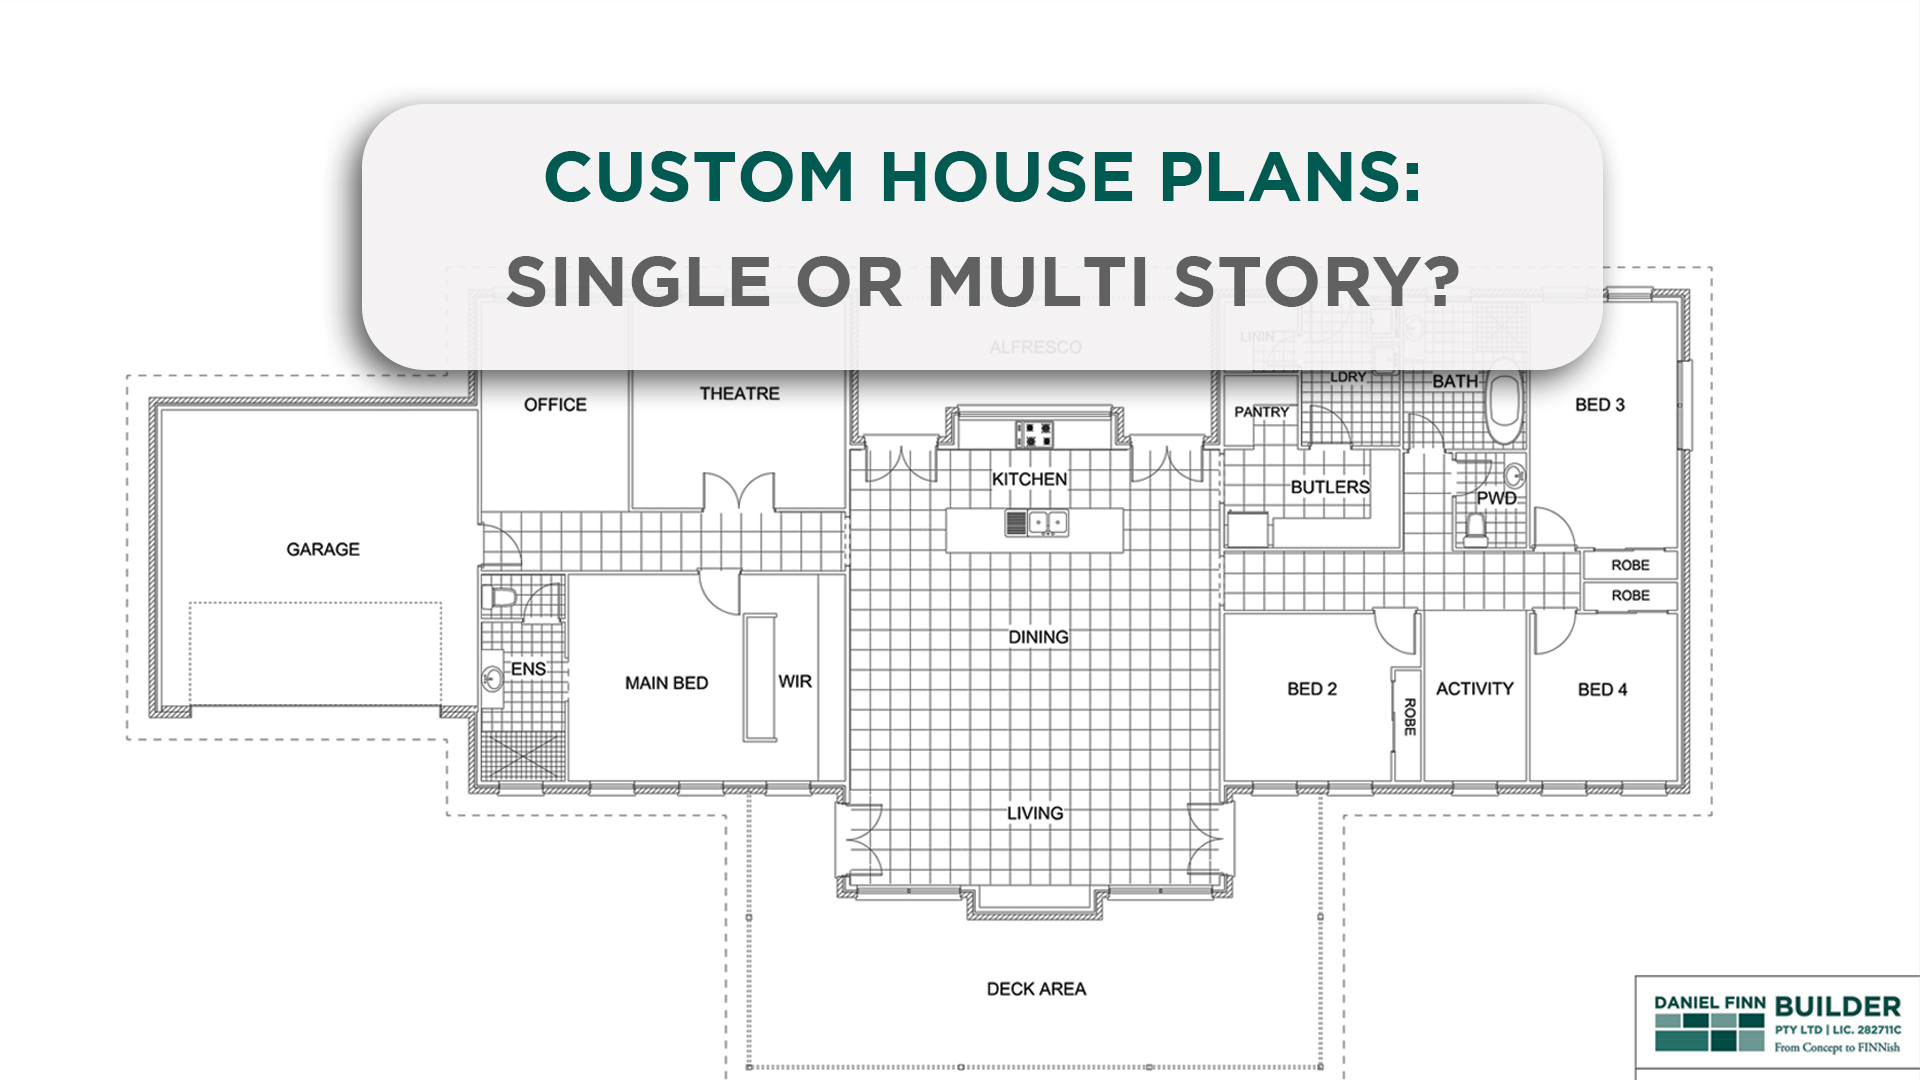 Custom house plans: Single or multi-story?